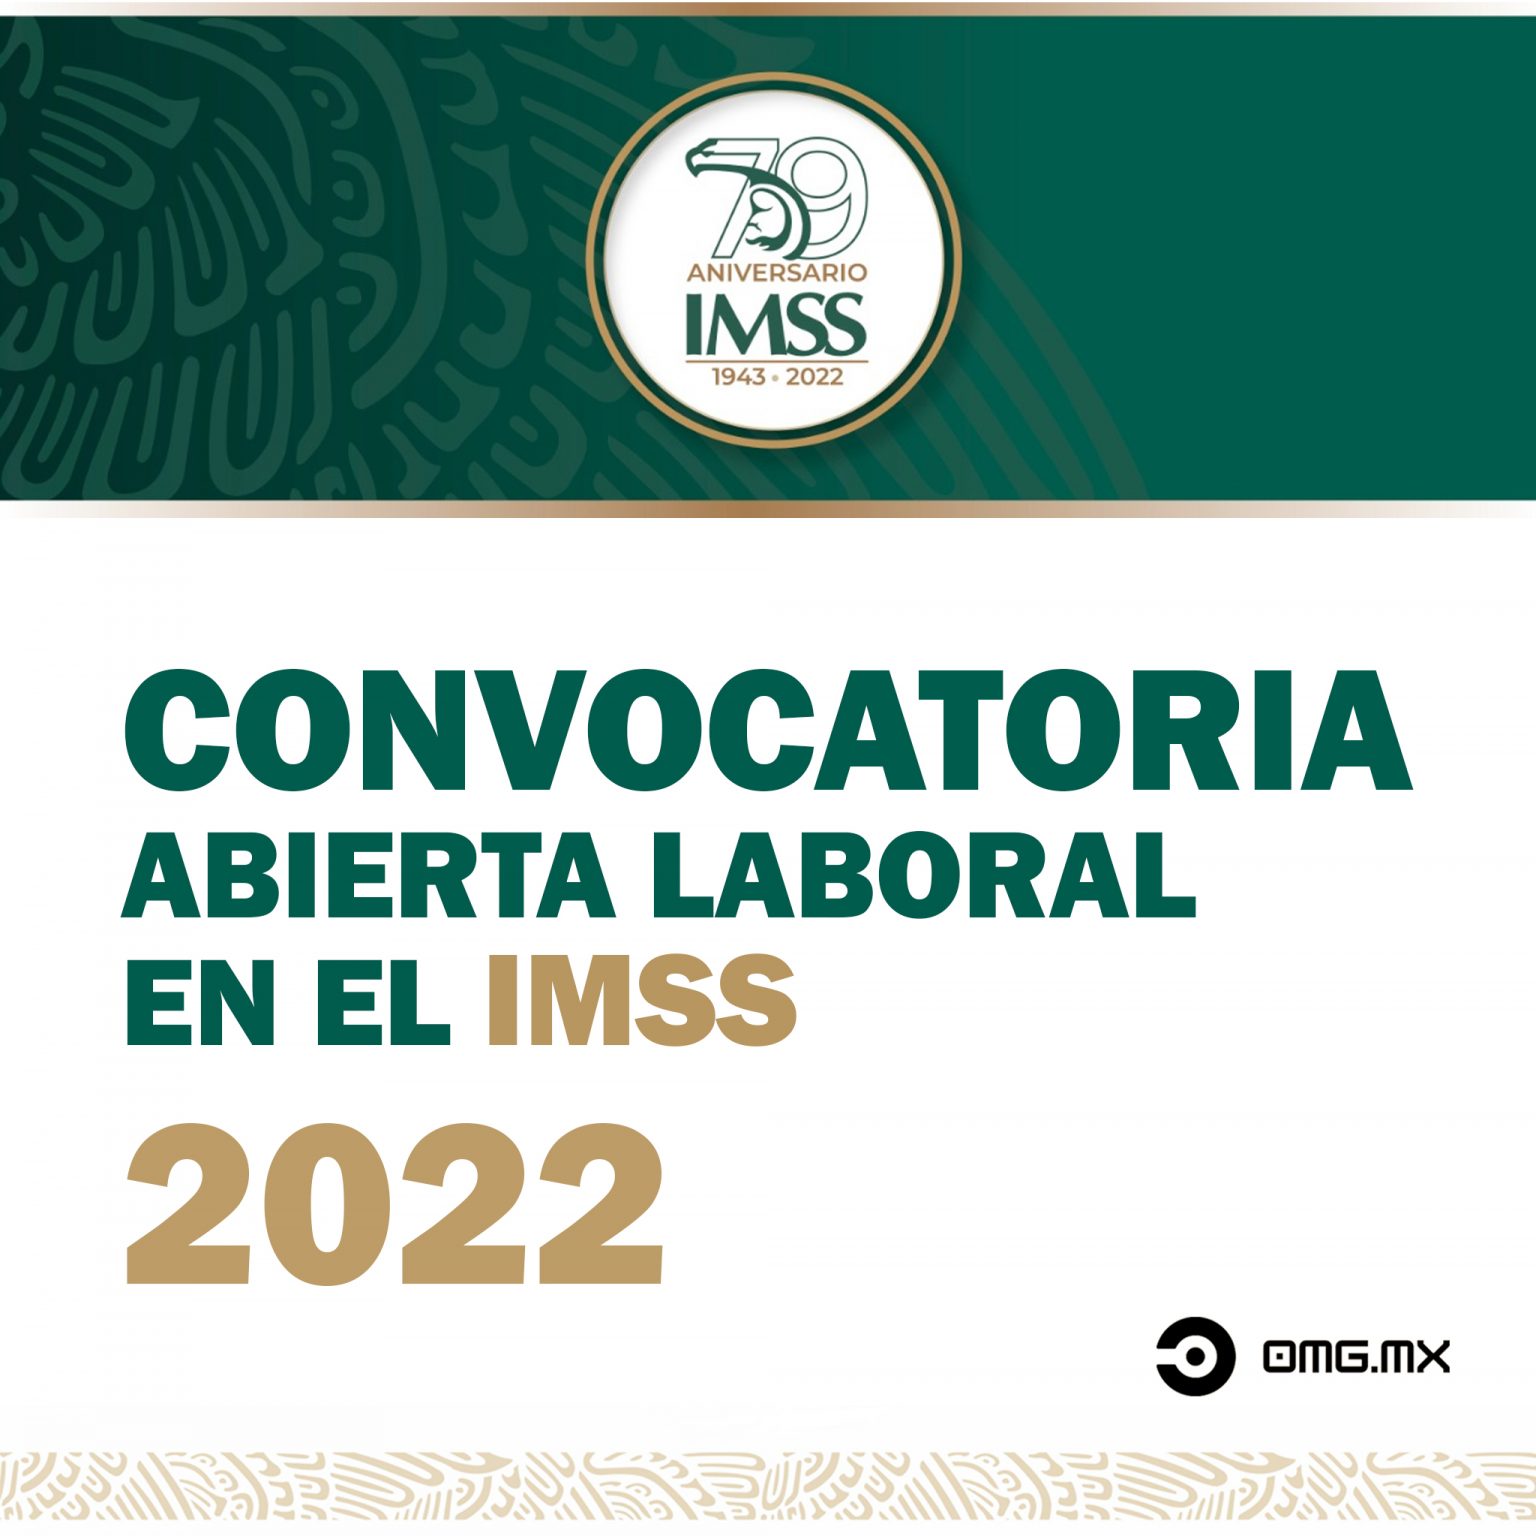 CONVOCATORIA ABIERTA NACIONAL PARA TRABAJAR EN EL IMSS 0MG.MX